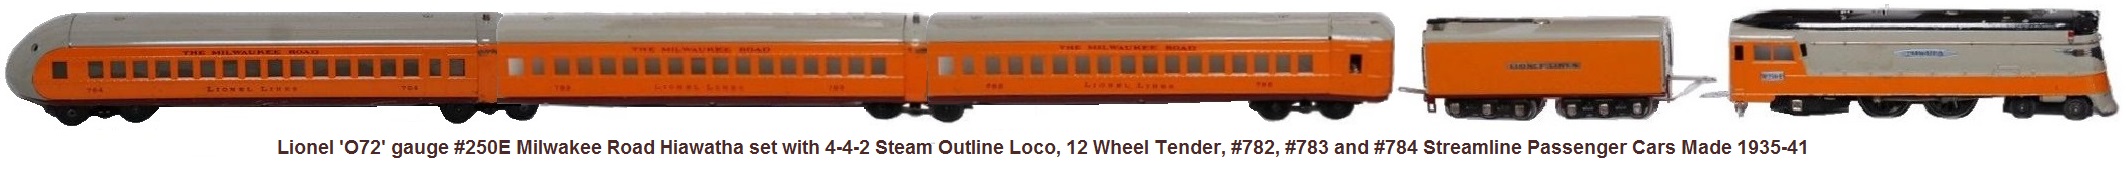 Lionel 'O72' gauge #250 Milwaukee Road Hiawatha Streamliner Passenger Set circa 1935-41